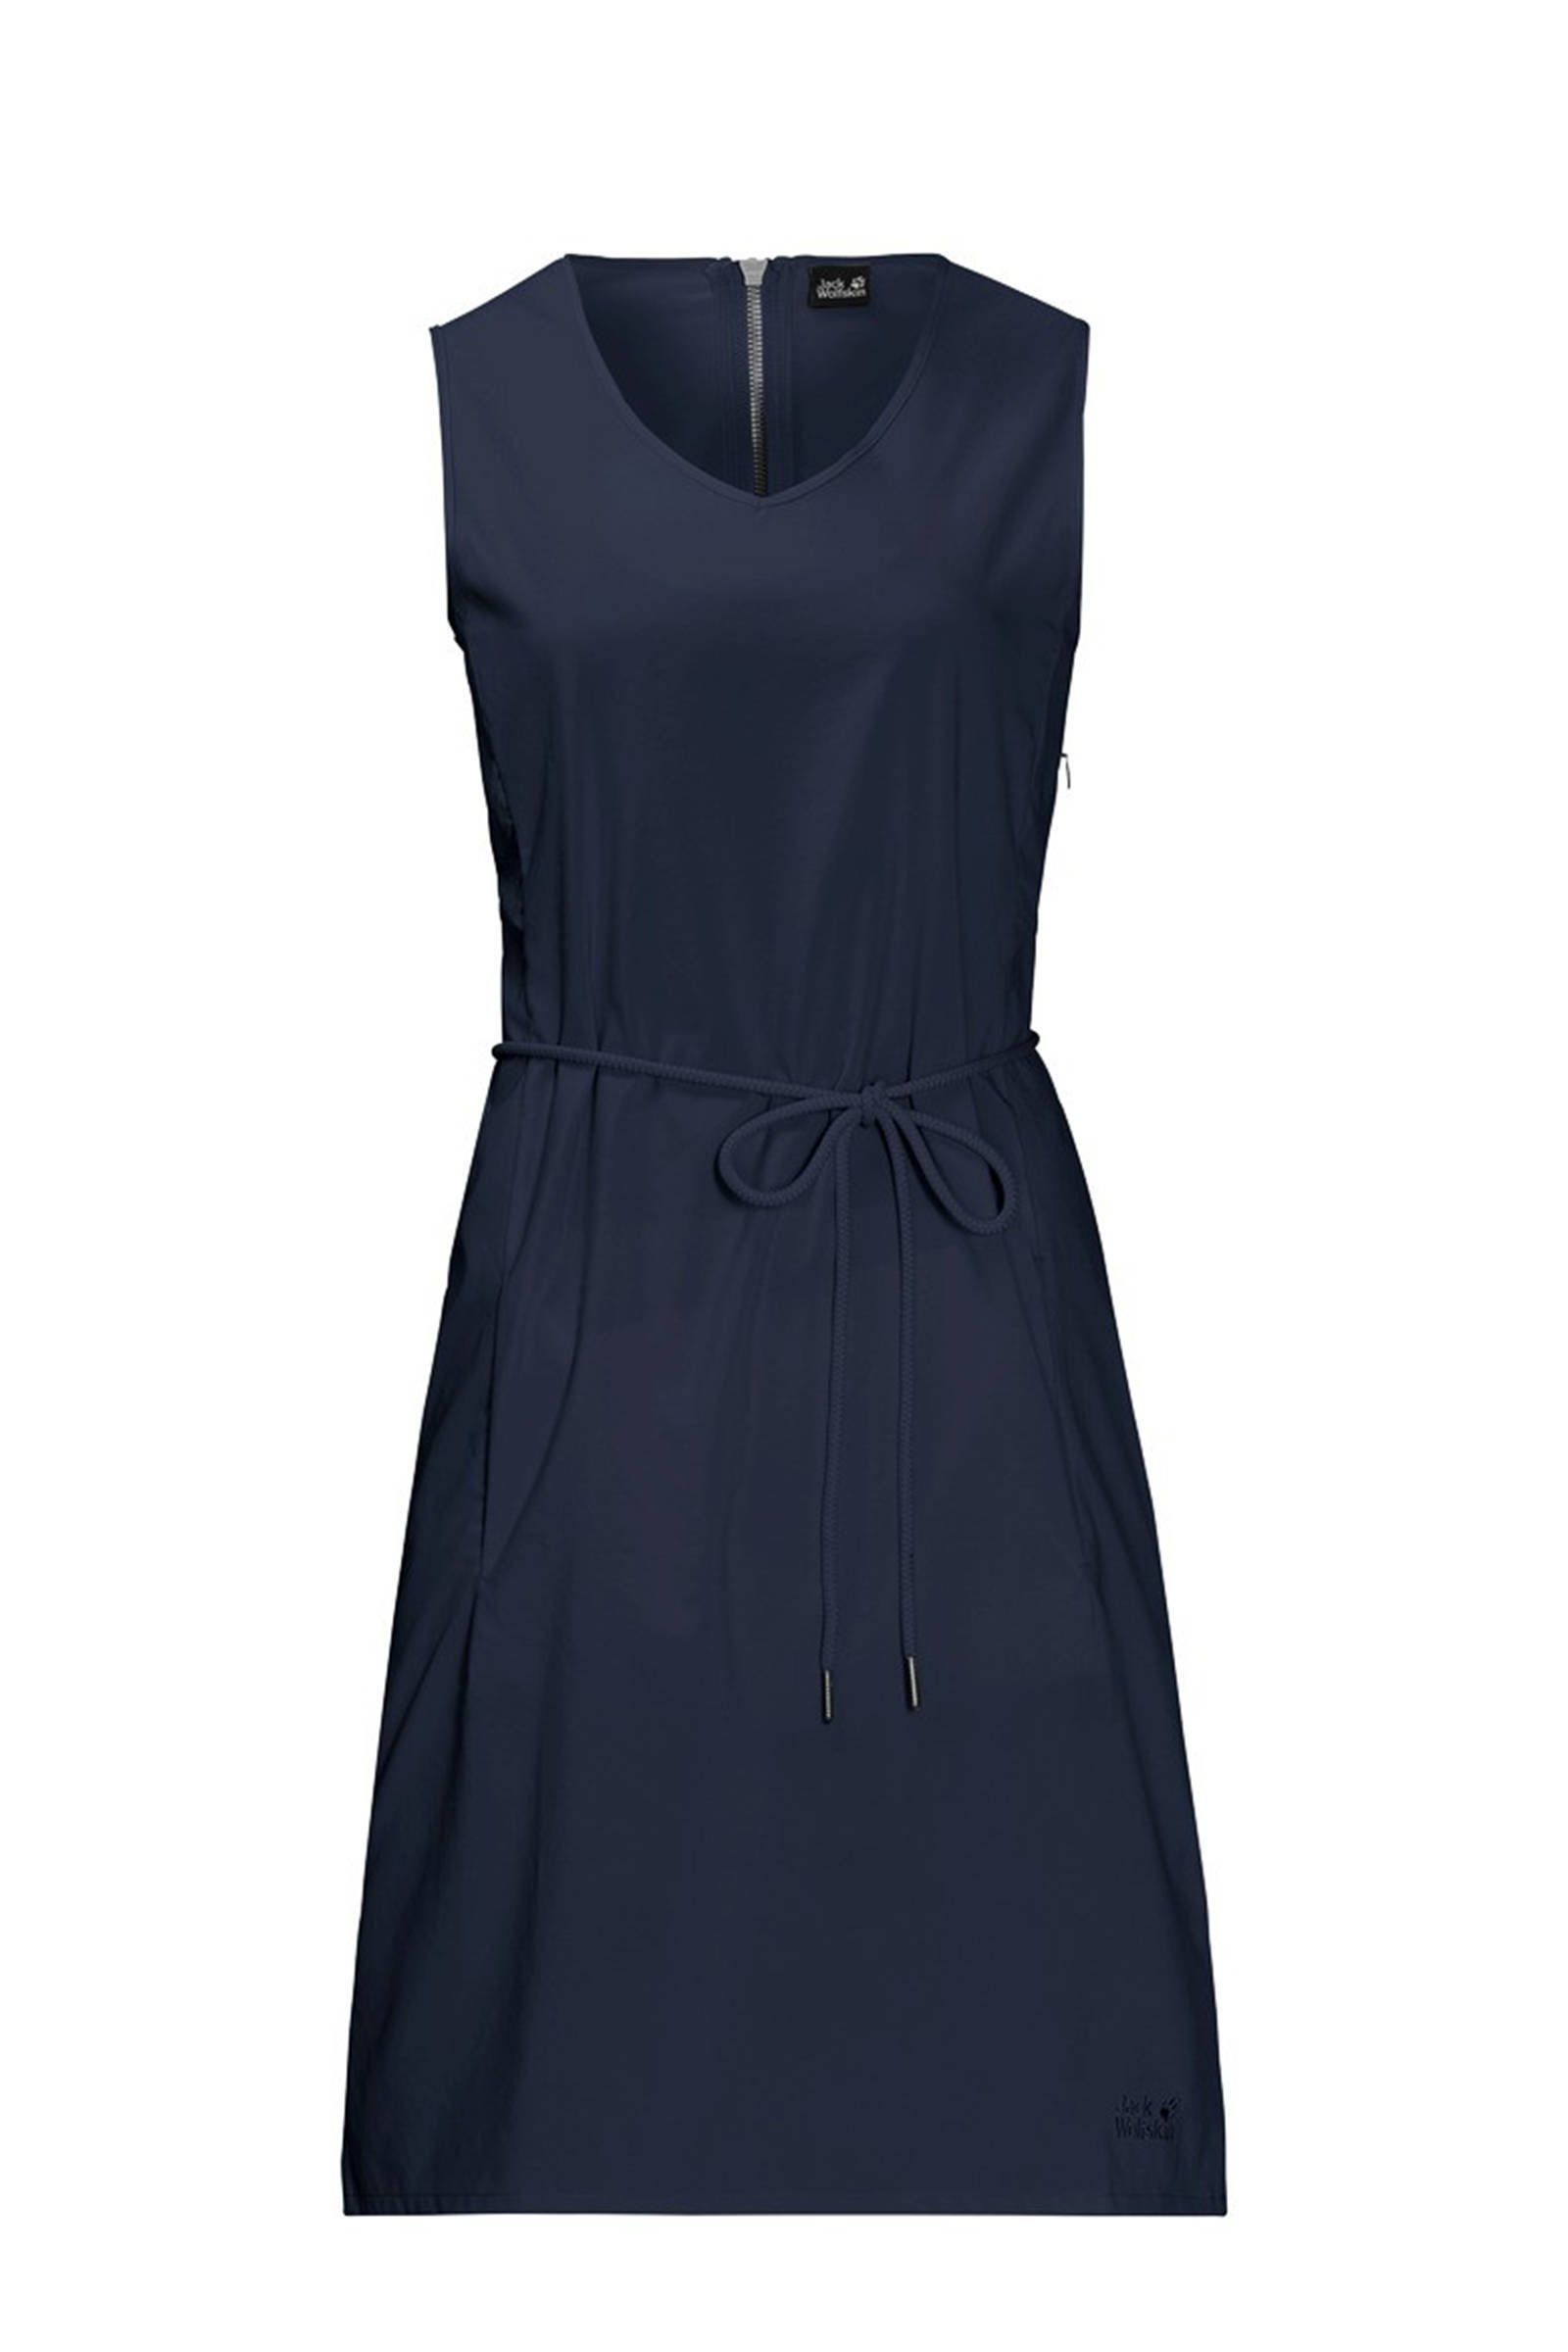 Jack Wolfskin outdoor jurk Tioga Road donkerblauw online kopen